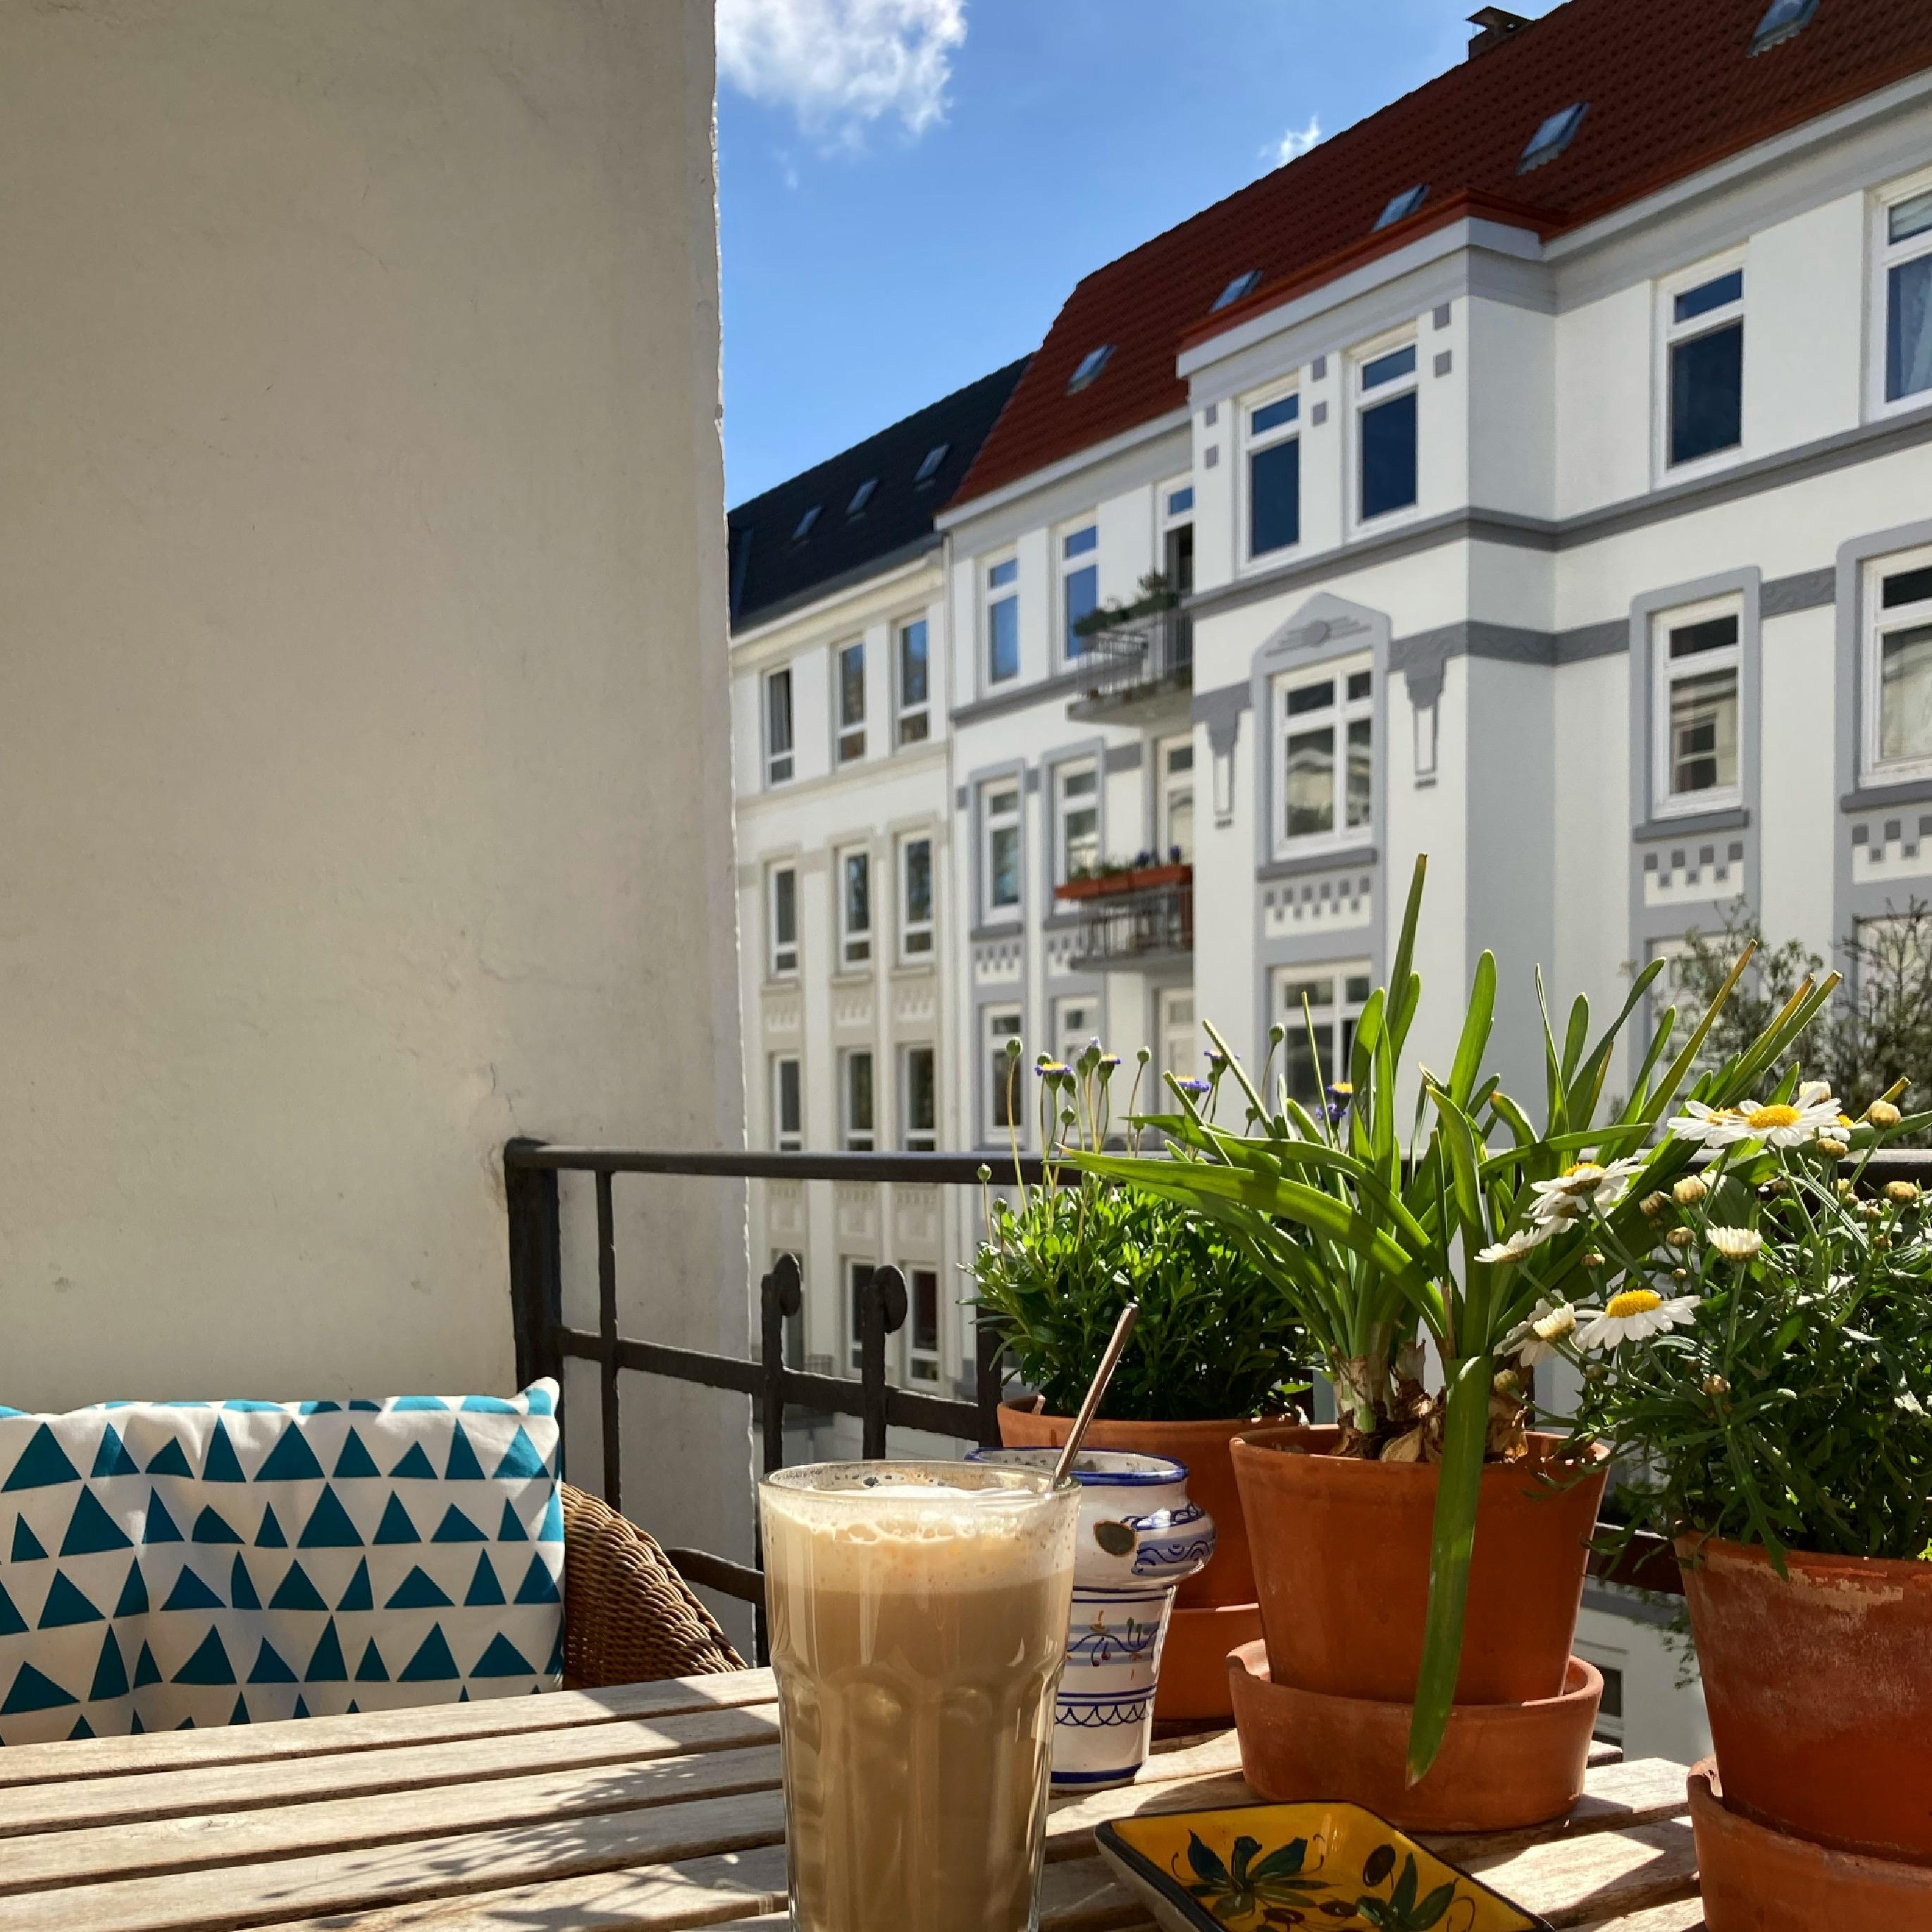 Erstmal Kaffee ☕️🌿☀️
#kaffee #balkon #frühling #sonne #hamburg